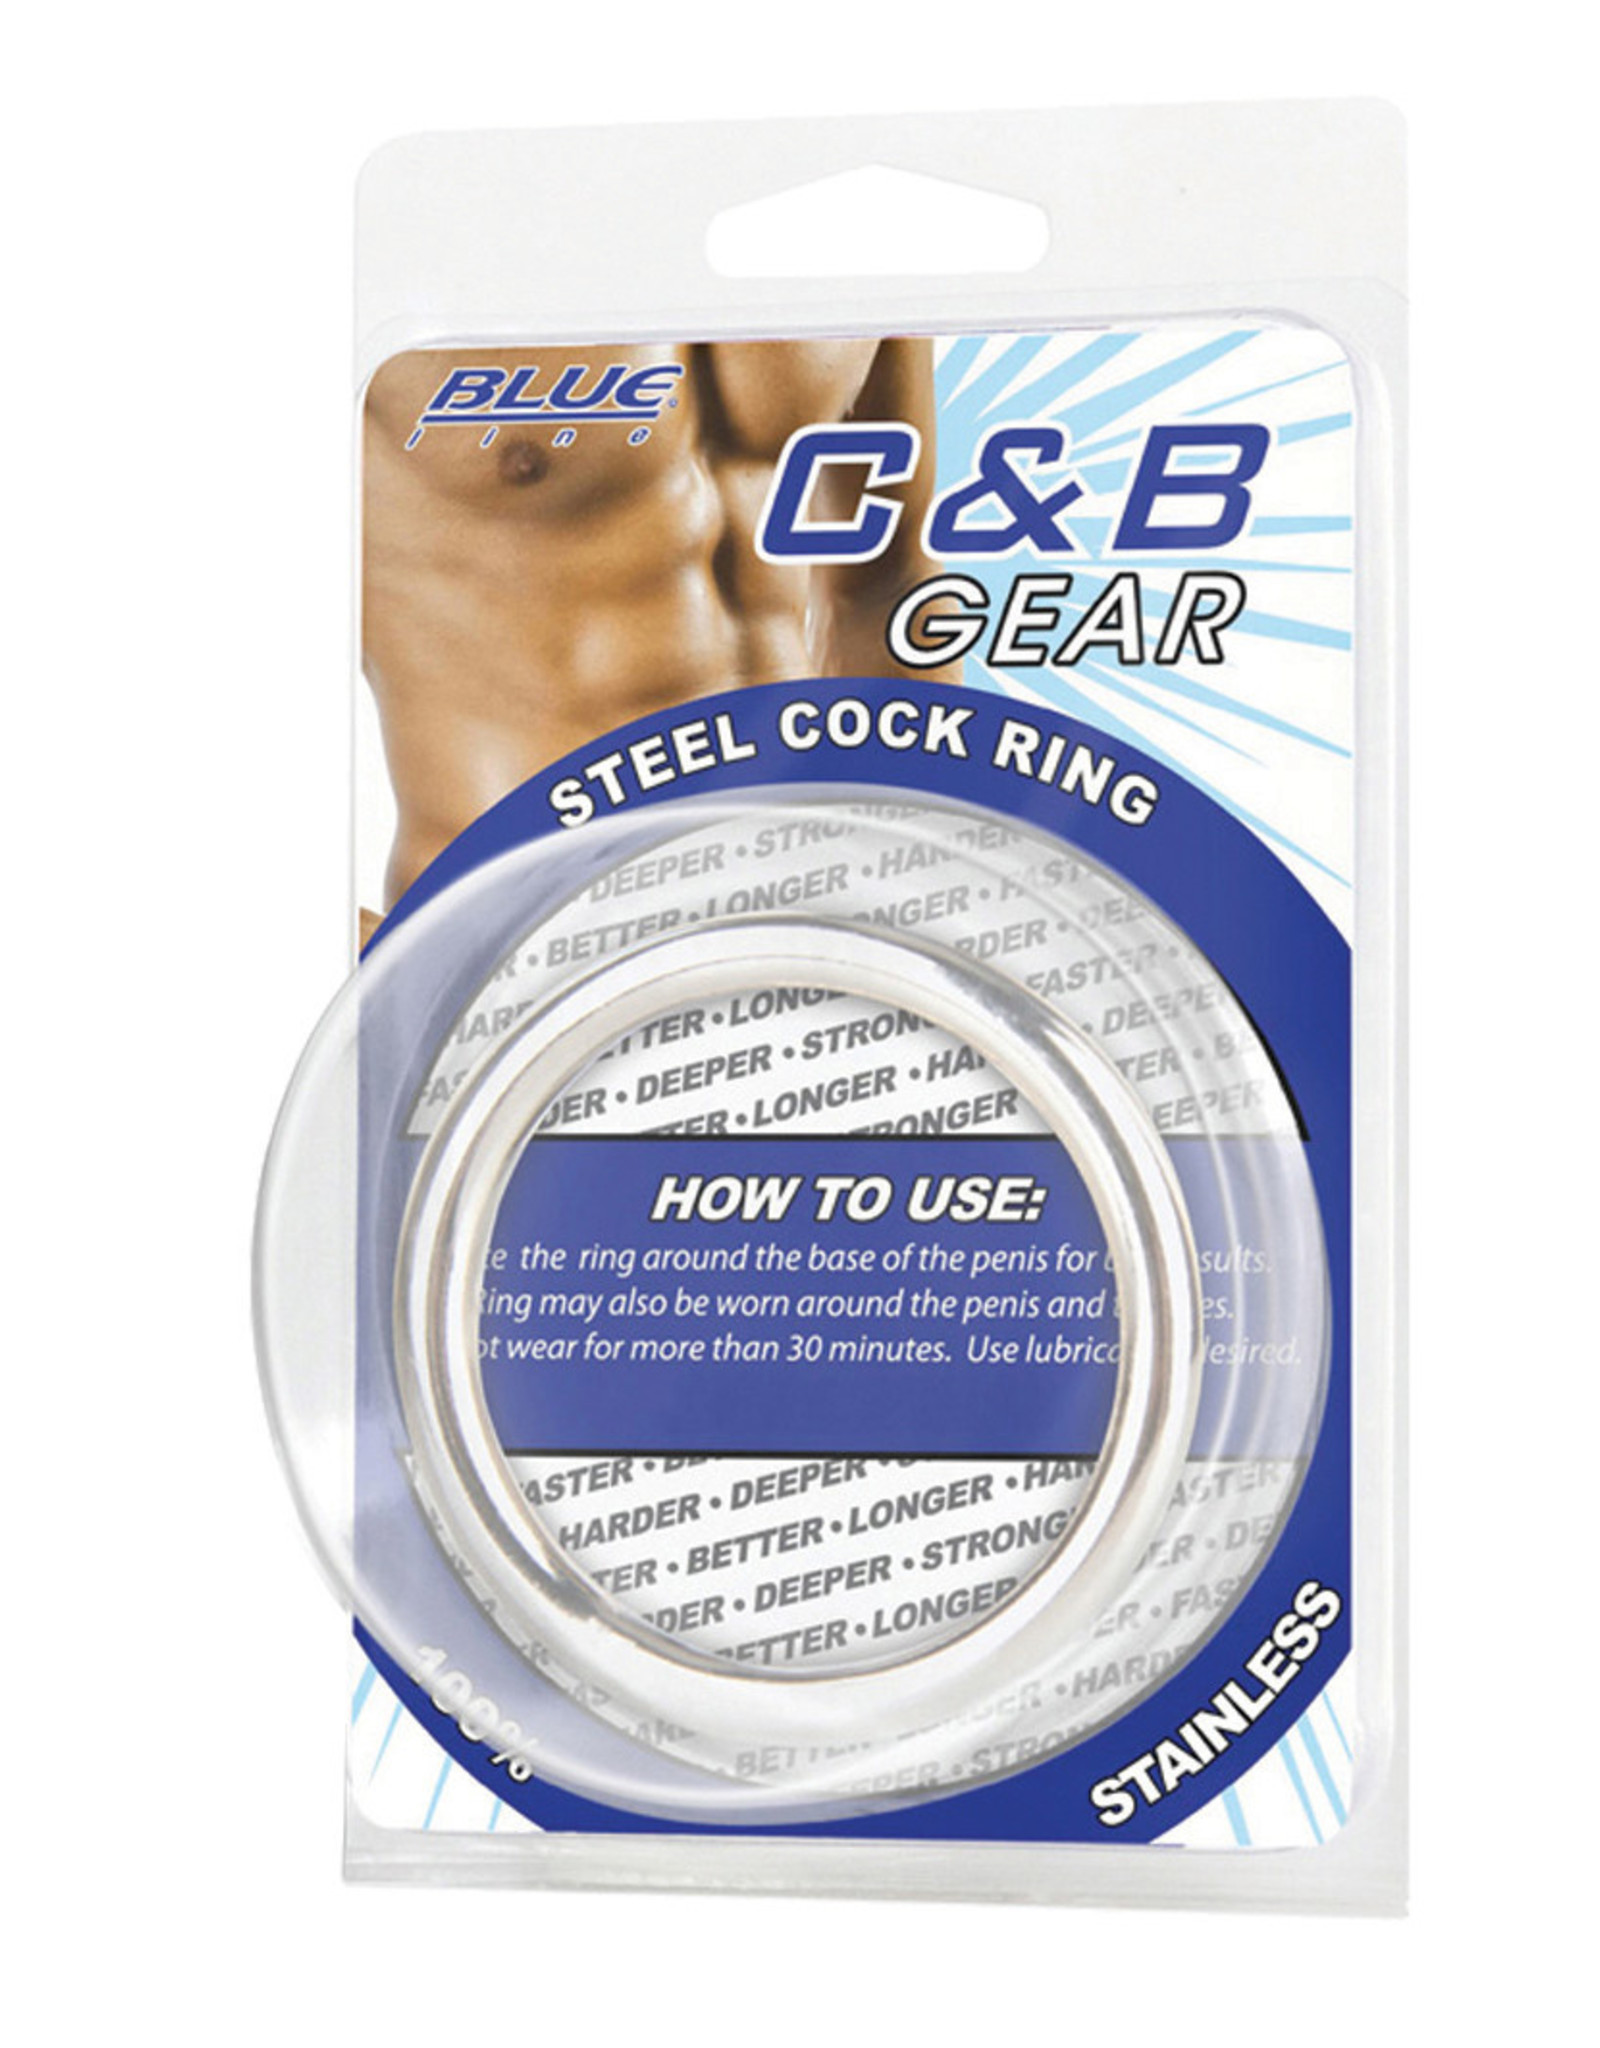 Sir Richards C&B Gear Steel Cock Ring